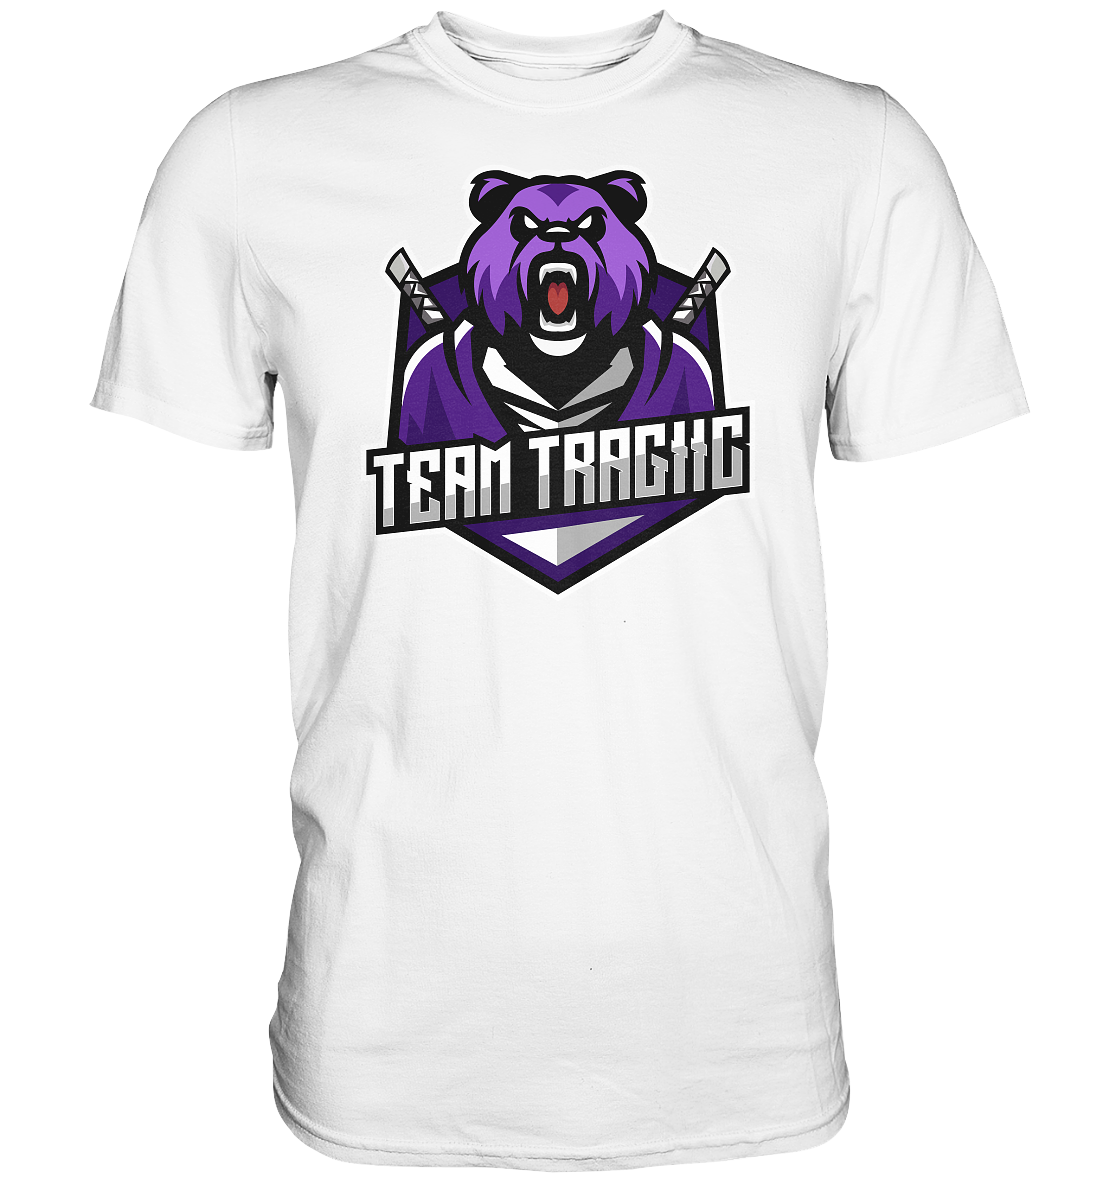 TEAM TRAGIIC - Basic Shirt